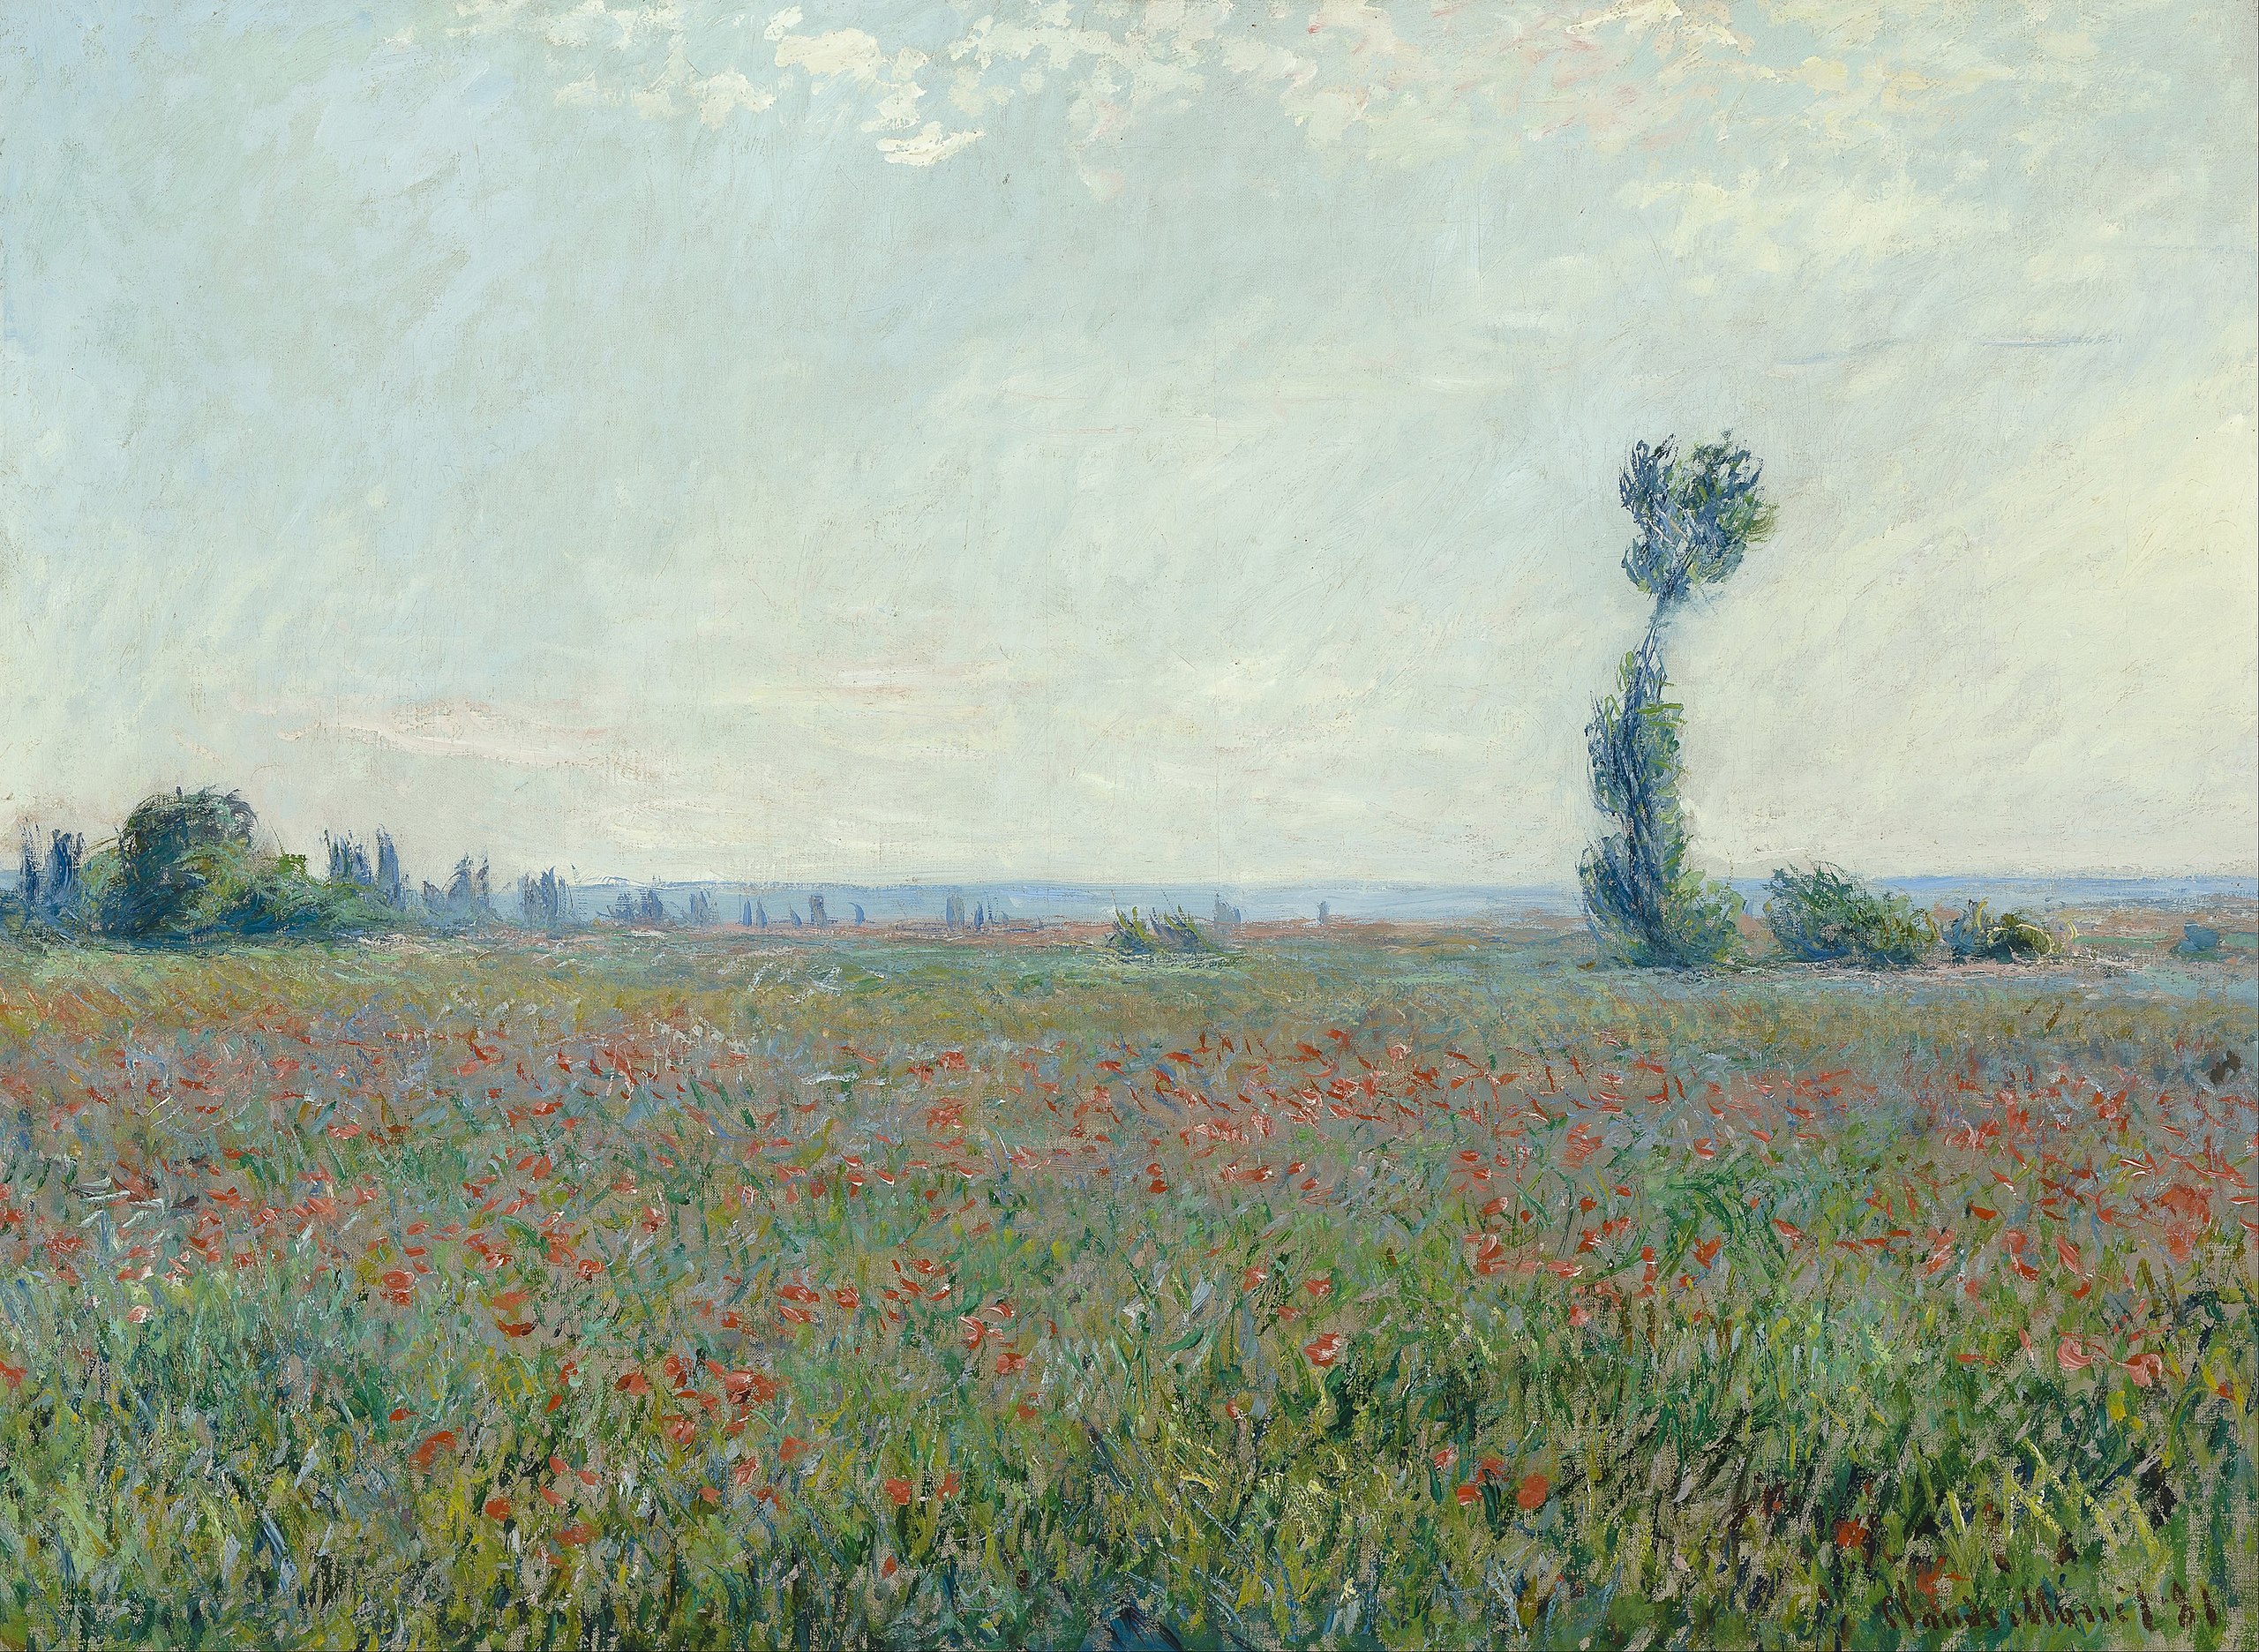 Pole maków by Claude Monet - 1881 r. - 79 x 58 cm 